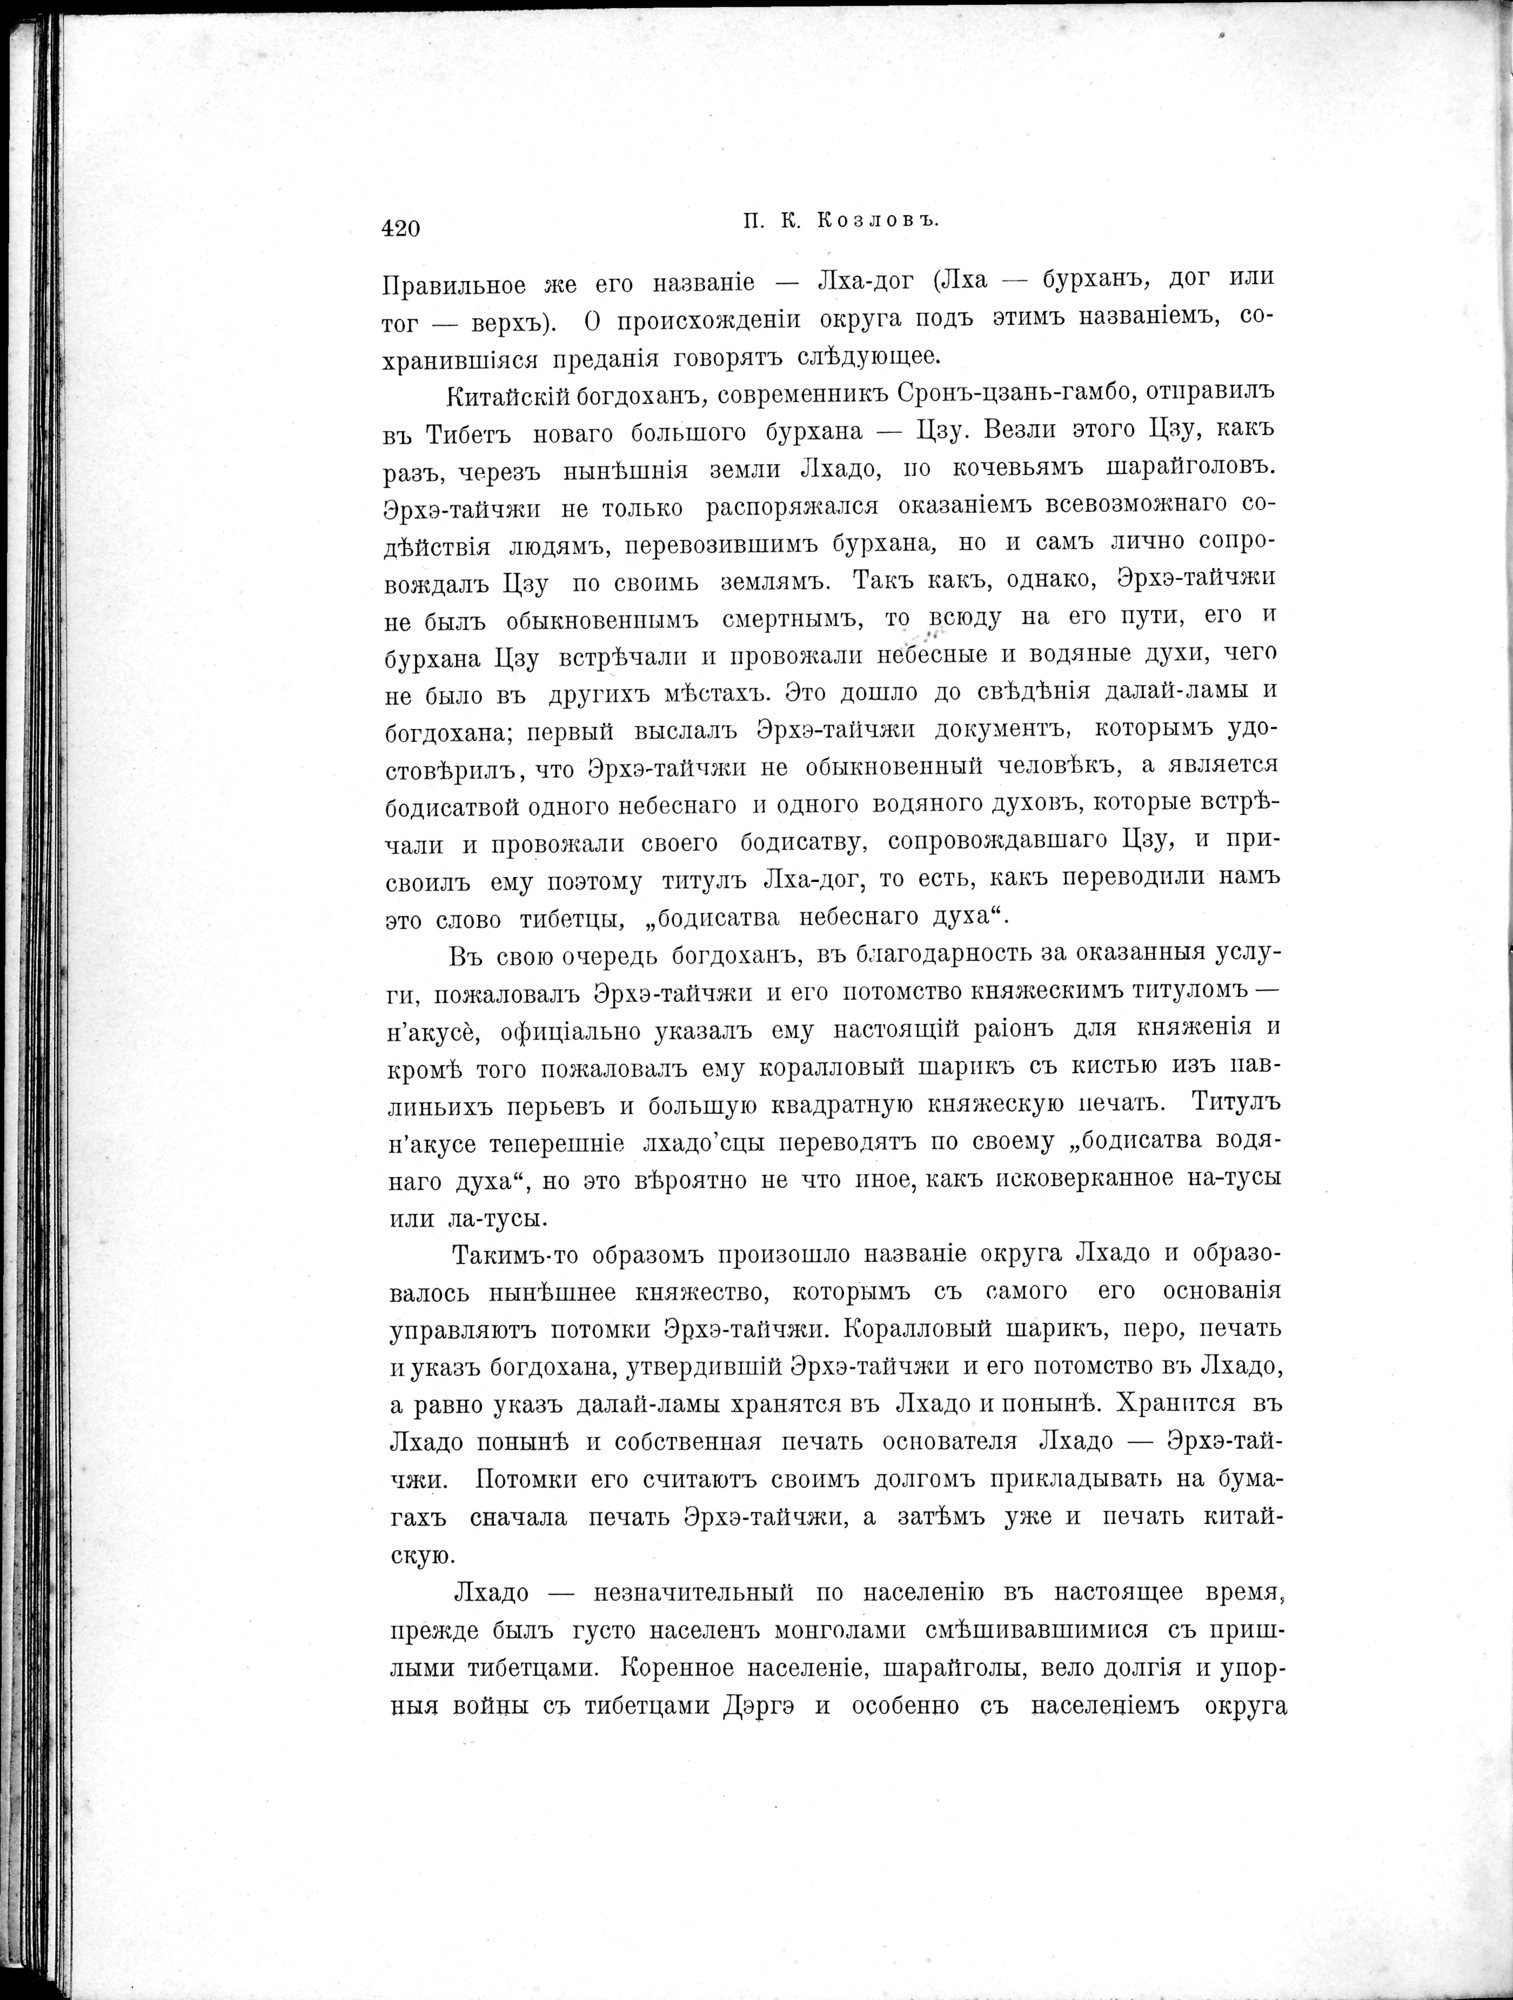 Mongoliia i Kam : vol.2 / Page 216 (Grayscale High Resolution Image)